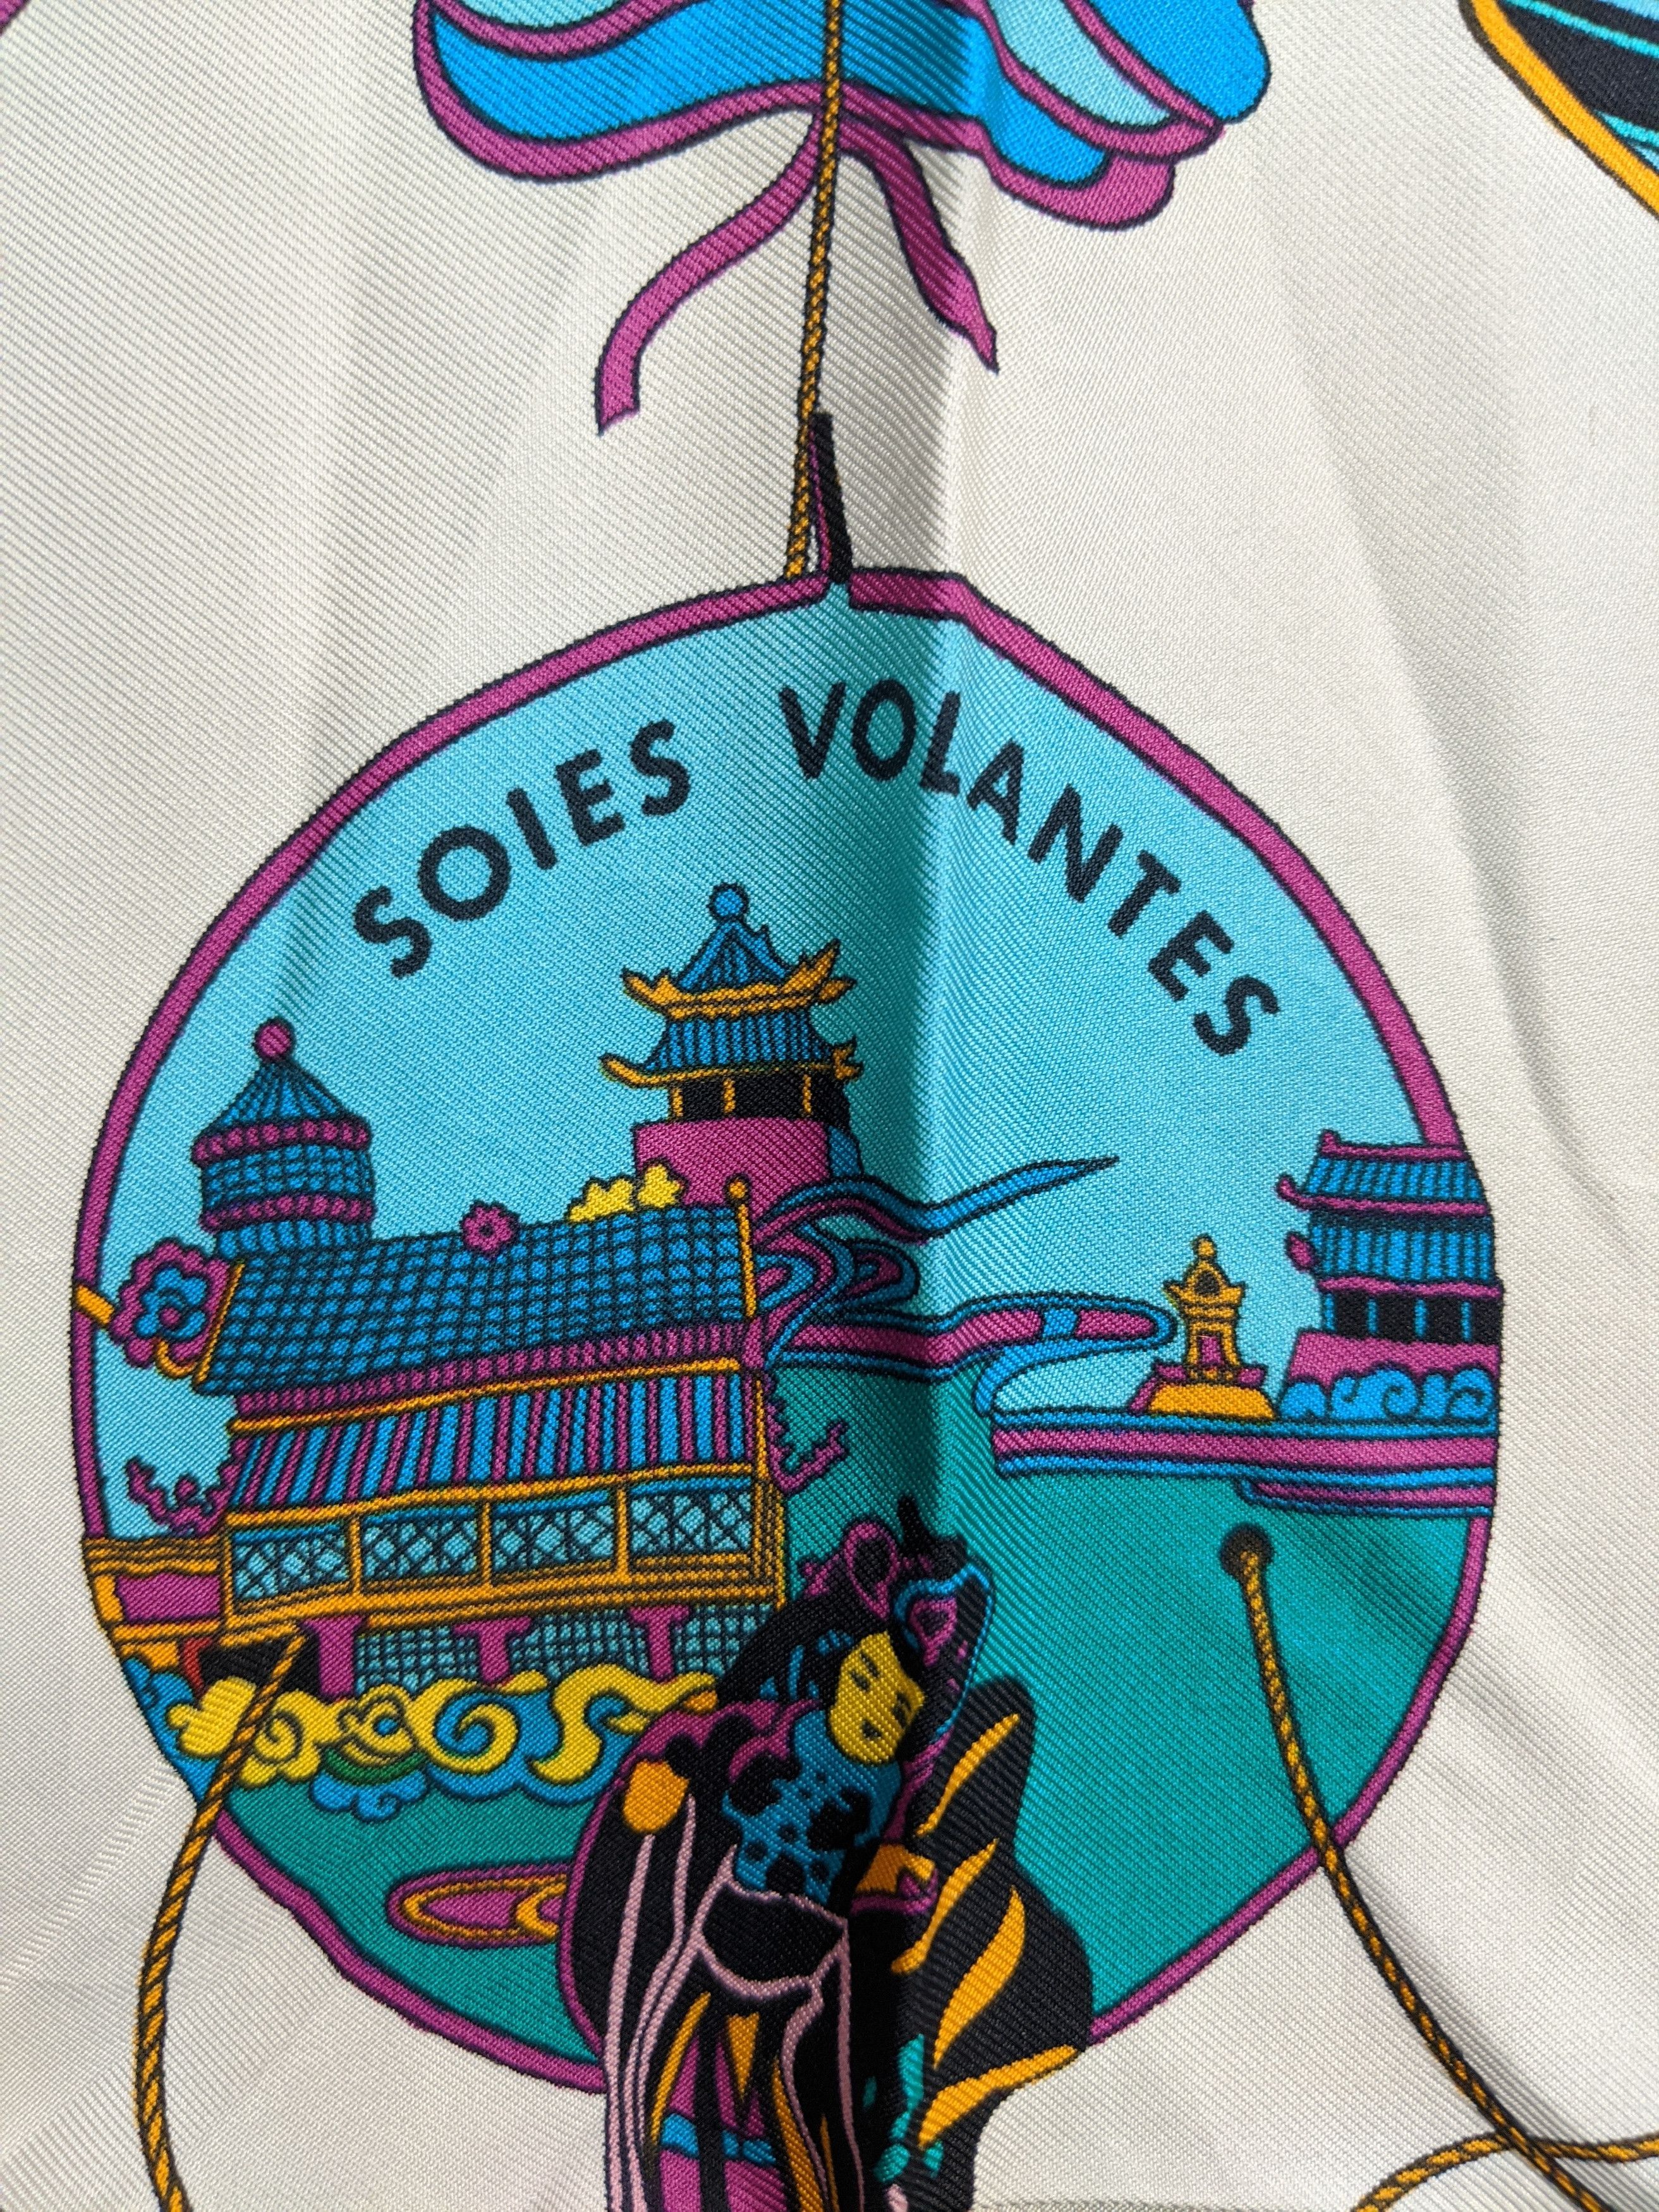 Hermes Soies Volantes by Loic Dubigeon Silk Scarf - 4